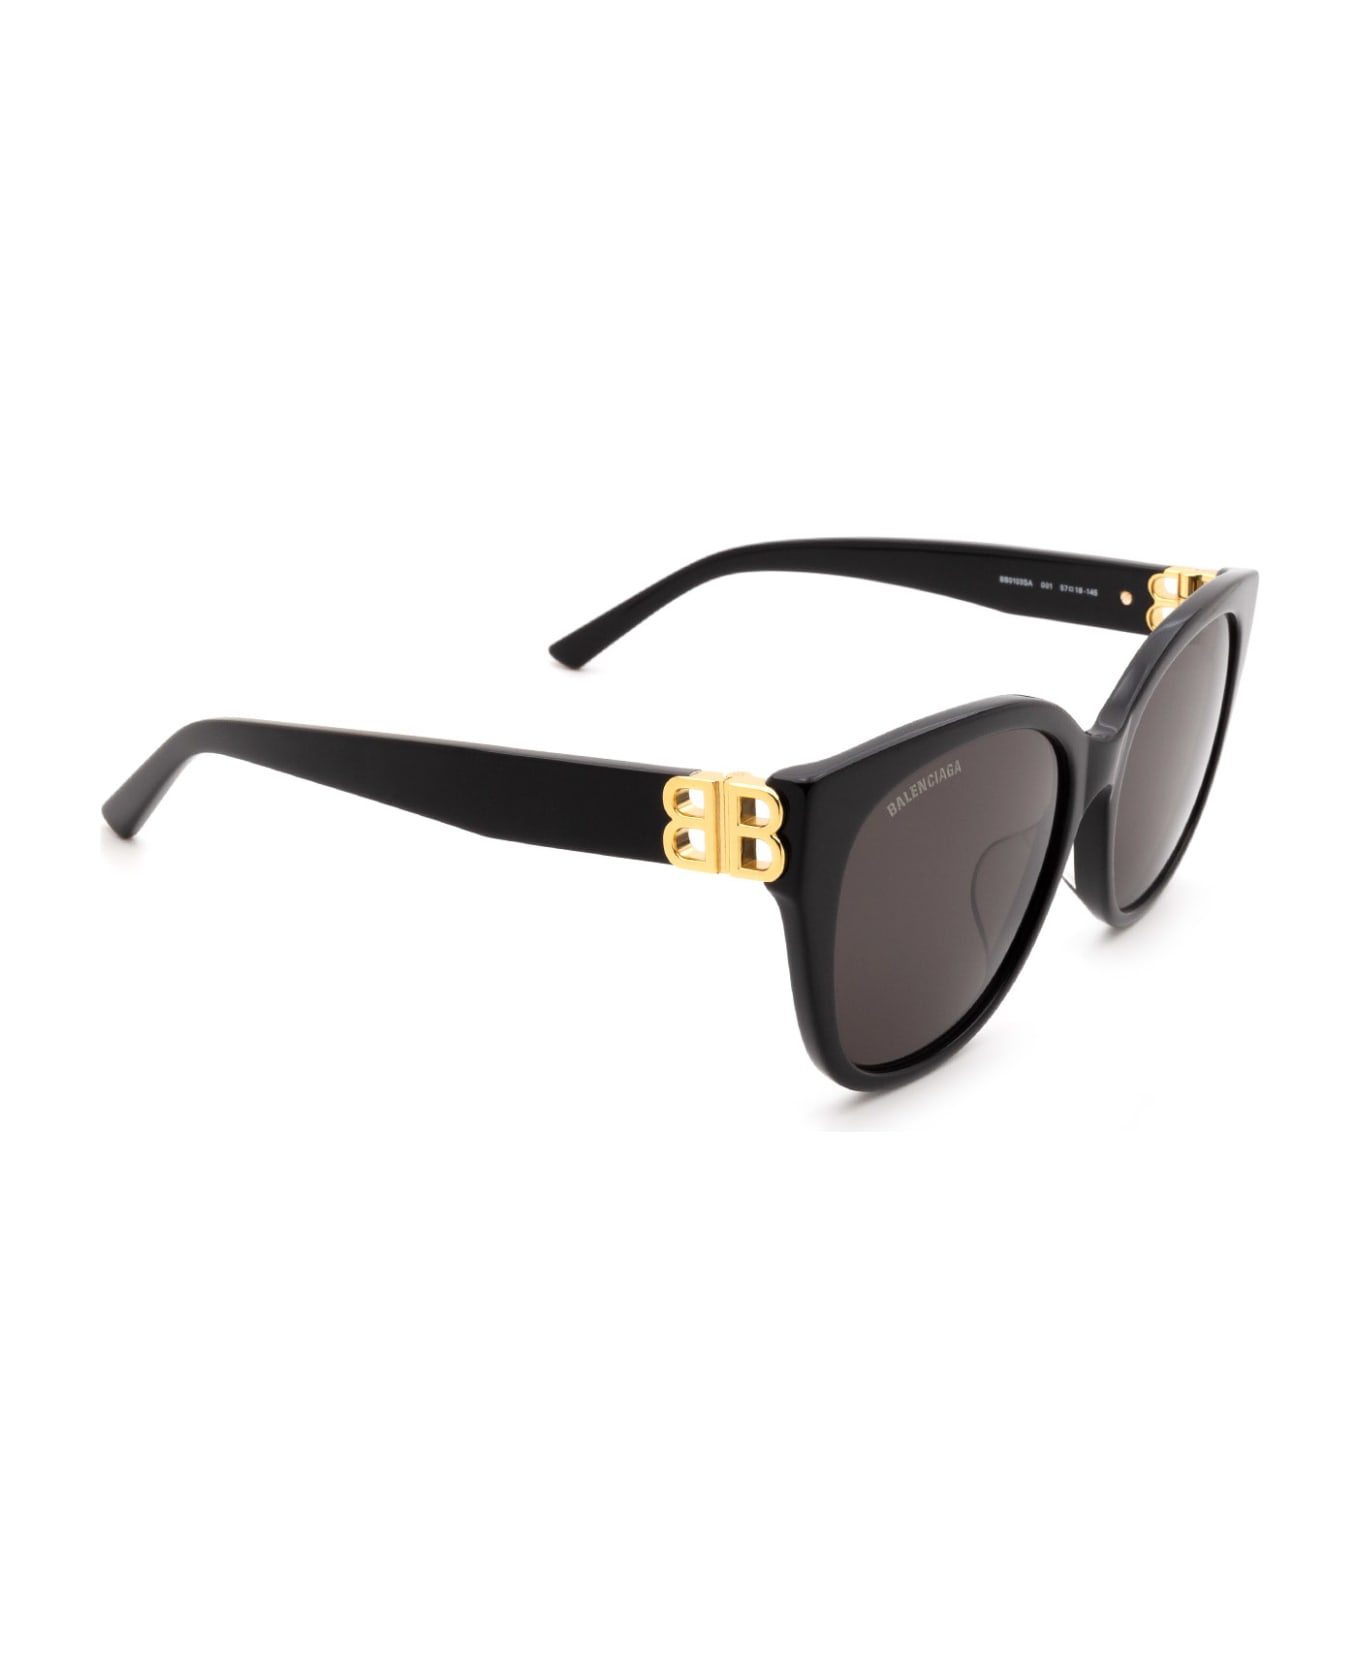 Balenciaga Eyewear Bb0103sa Sunglasses - 001 BLACK GOLD GREY